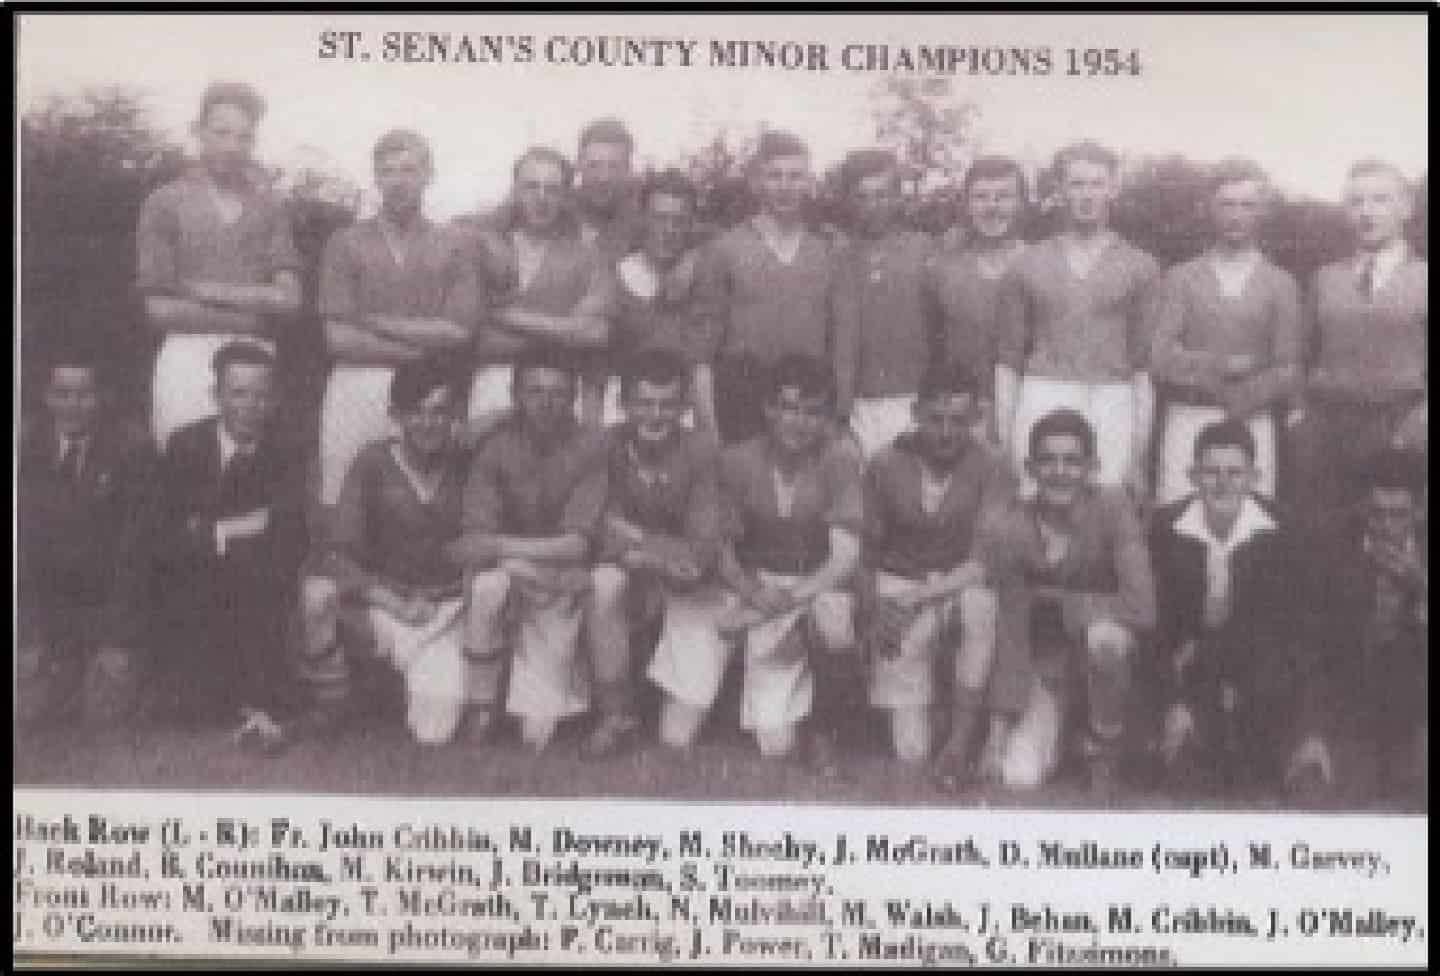 1954-county-minor-champions